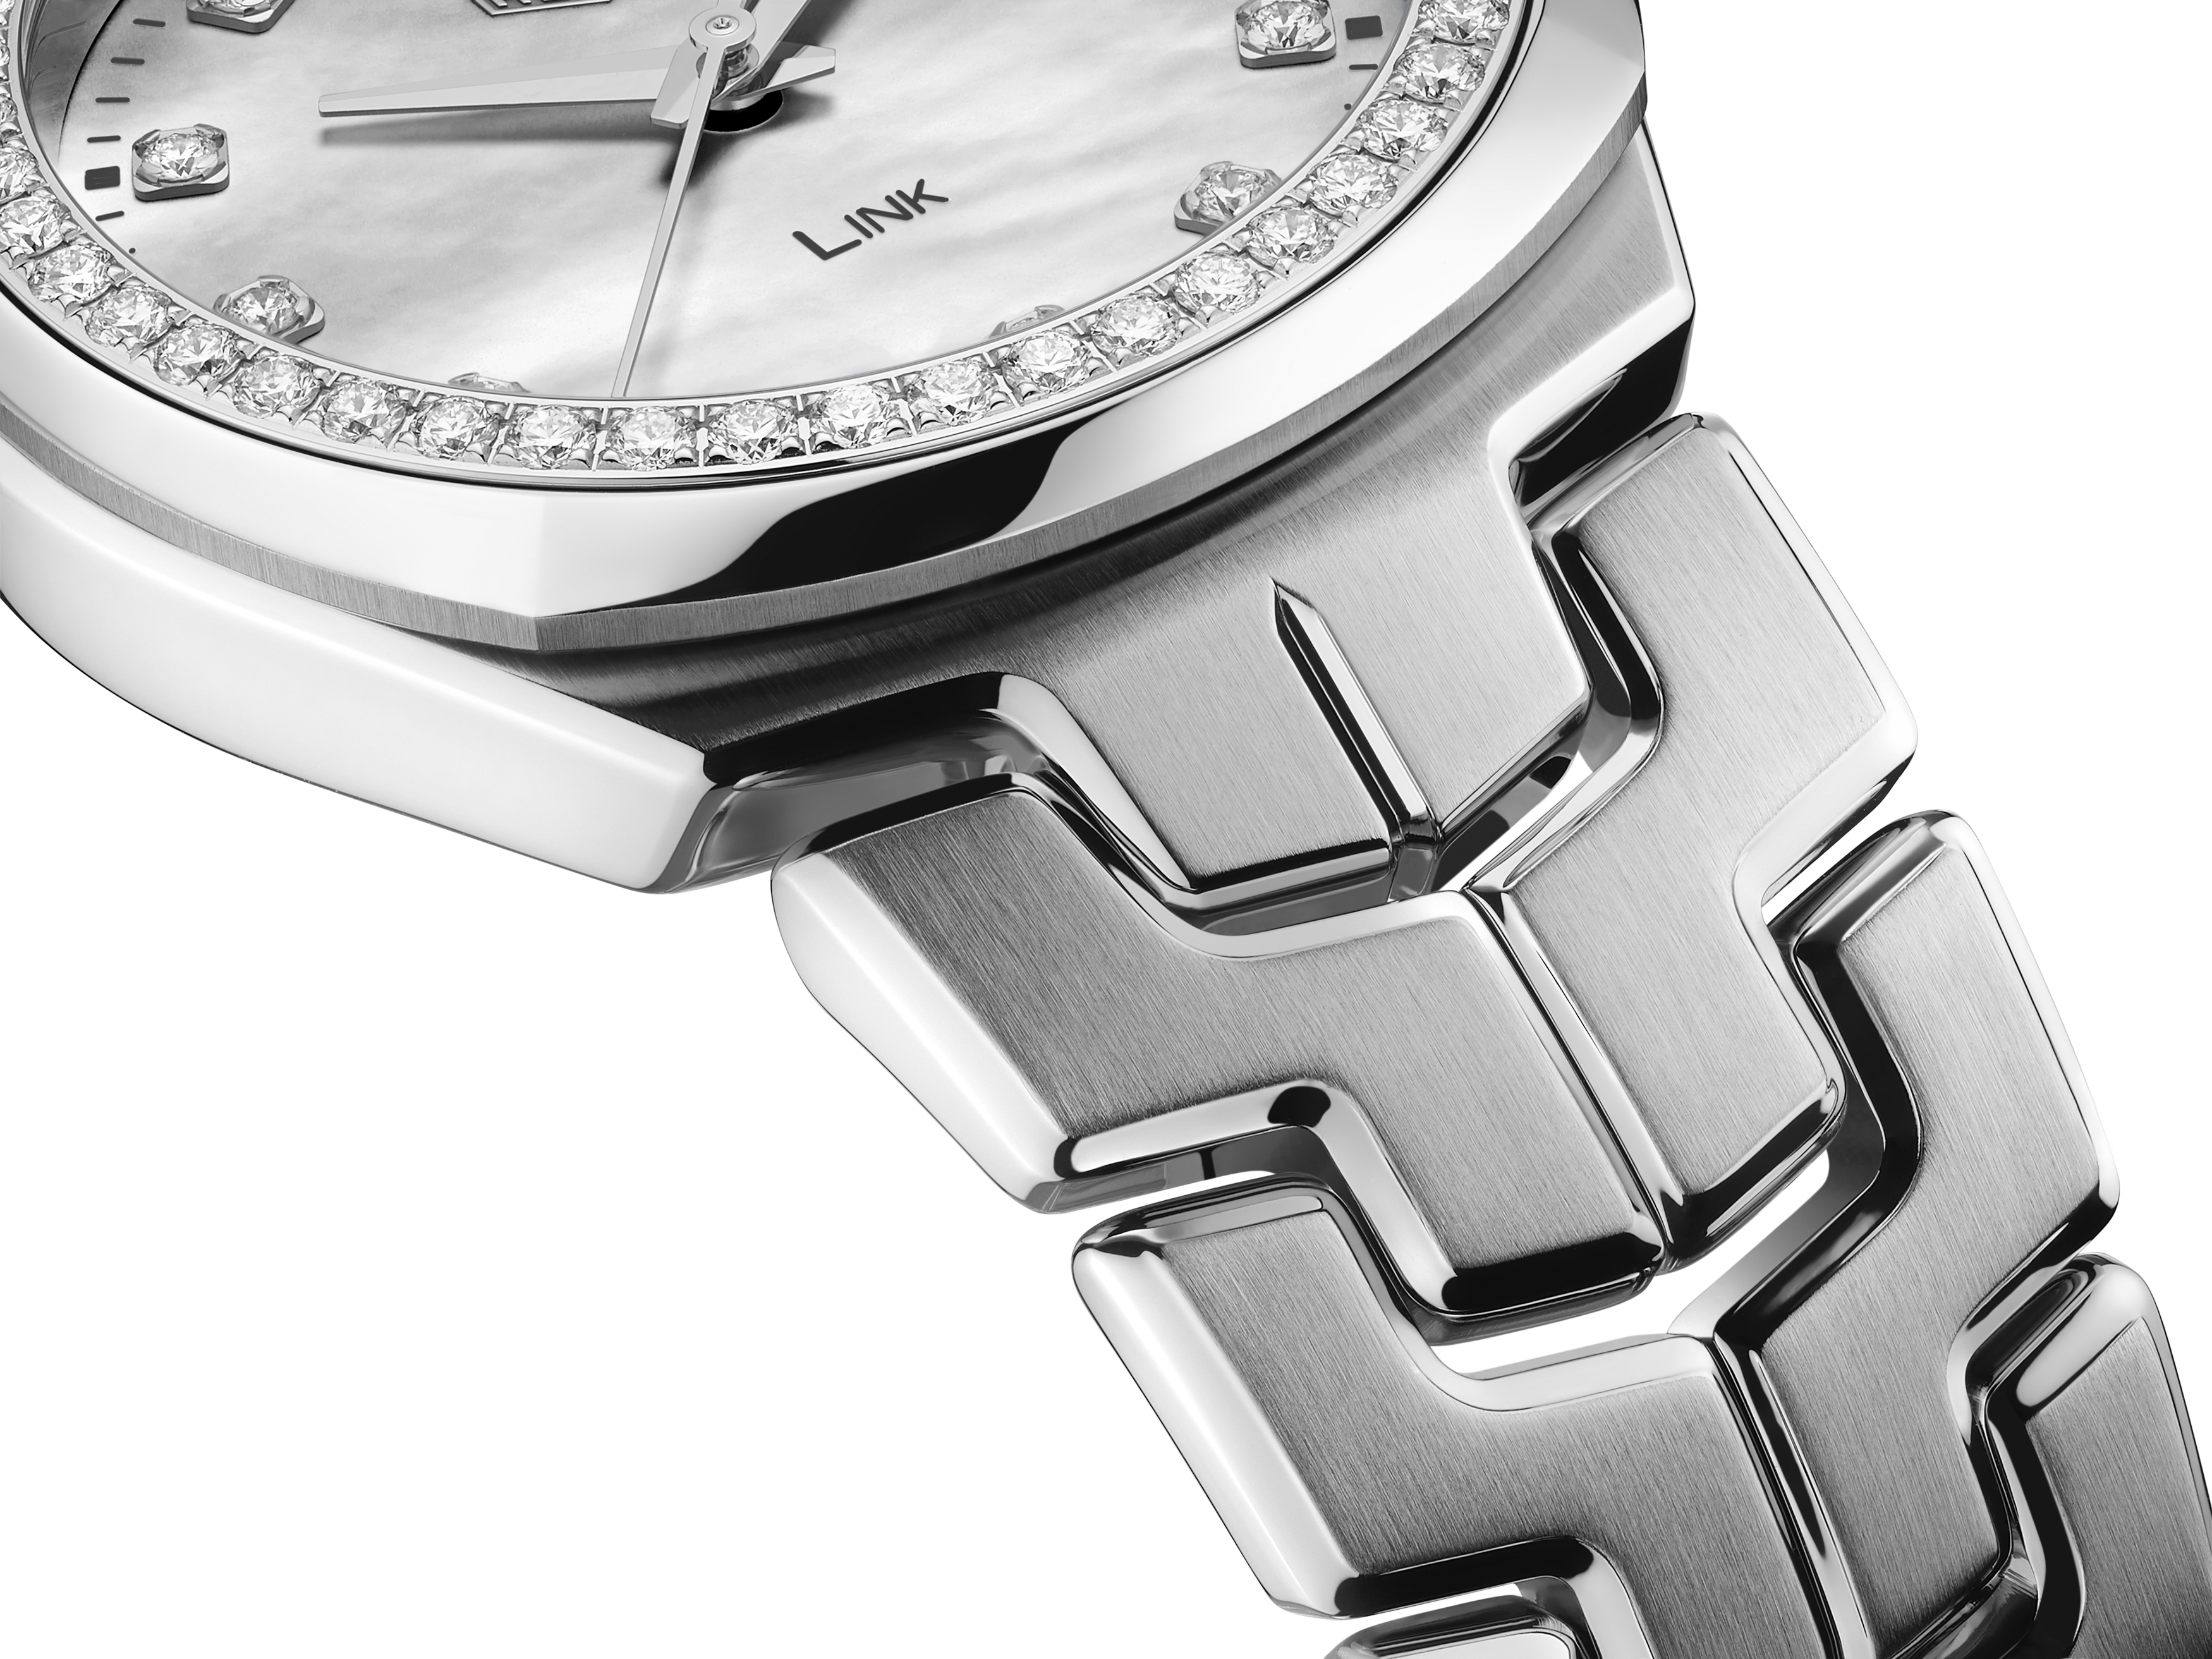 Tag Heuer Steel 32mm Quartz Link Watch With Diamonds